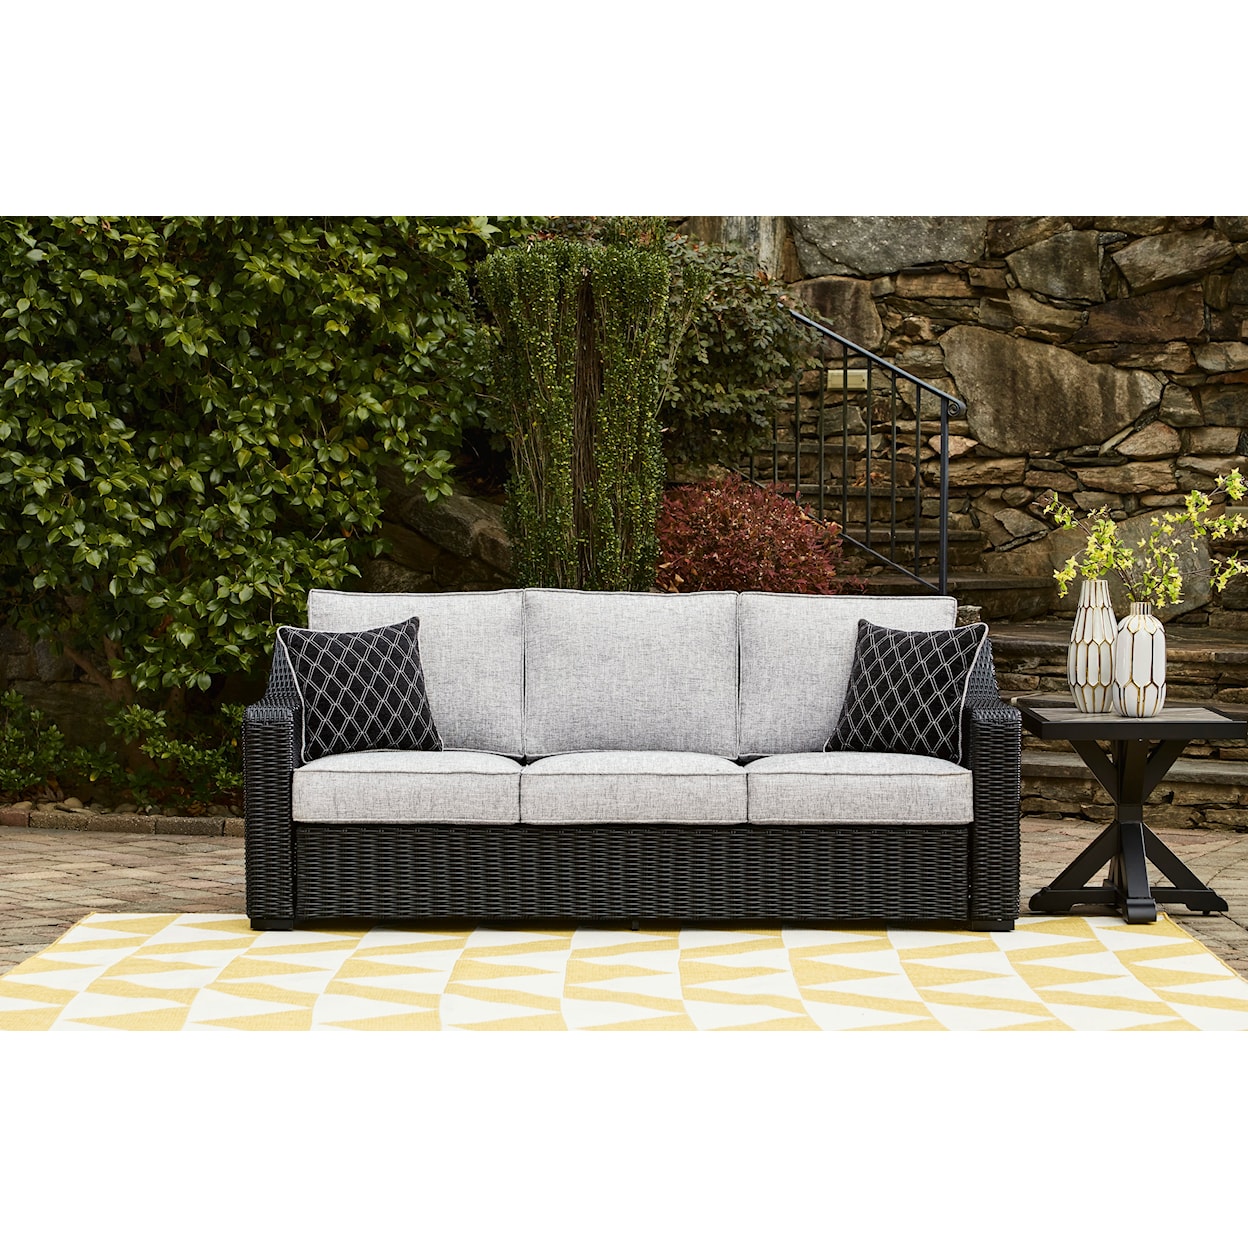 Ashley Furniture Signature Design Beachcroft Outdoor Sofa With Cushion